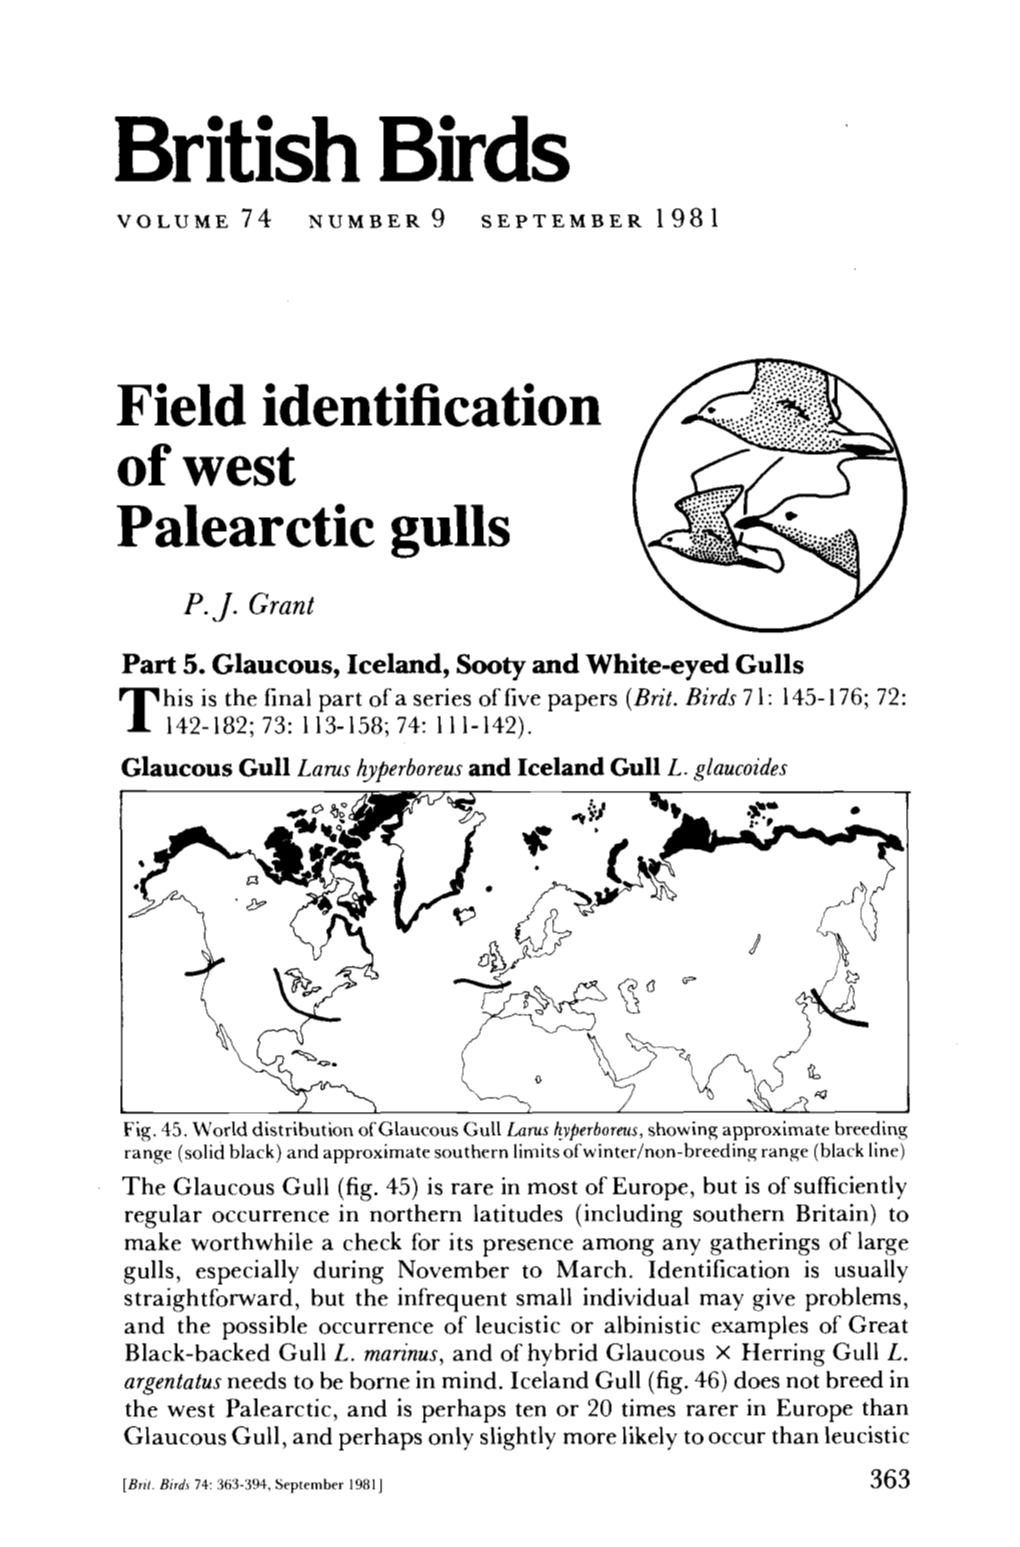 Field Identification of West Palearctic Gulls P.J